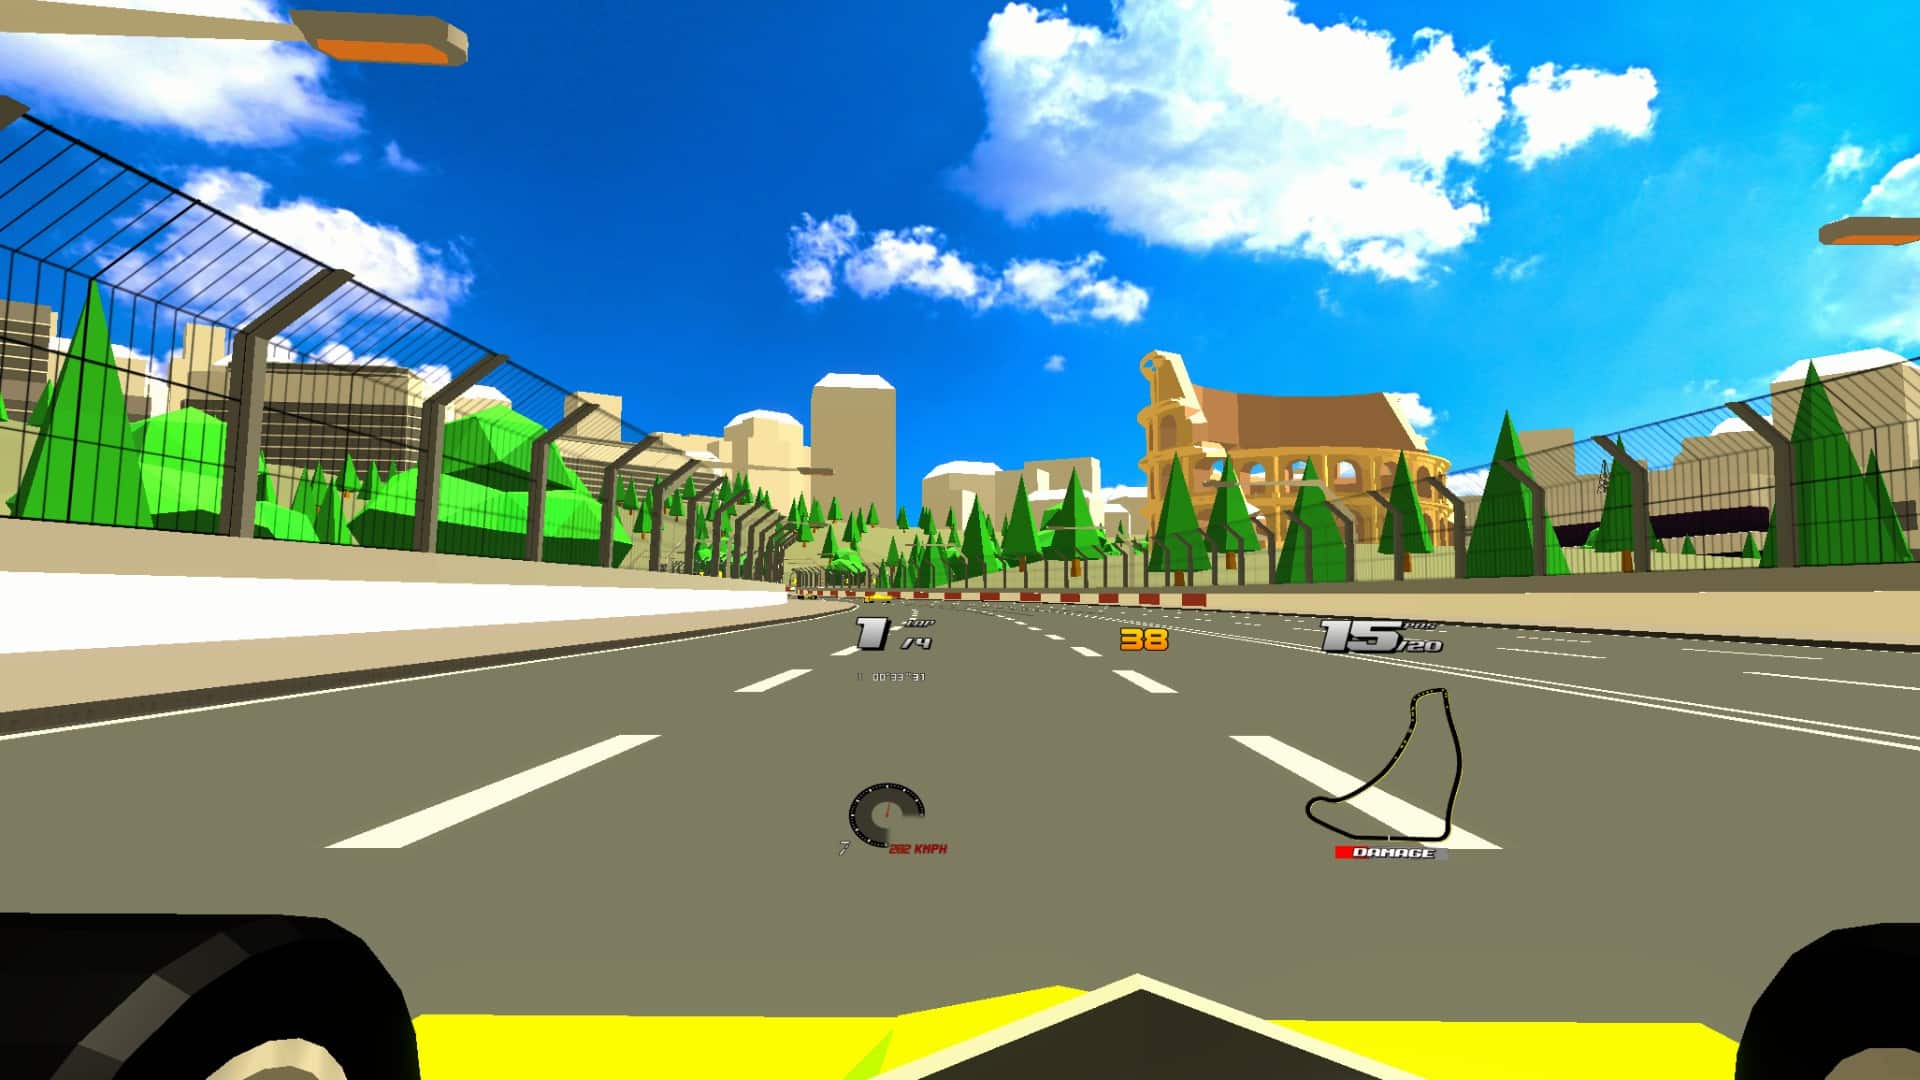 Formula Retro Racing – World Tour Hands-On: Passable Arcade Racing On PC VR